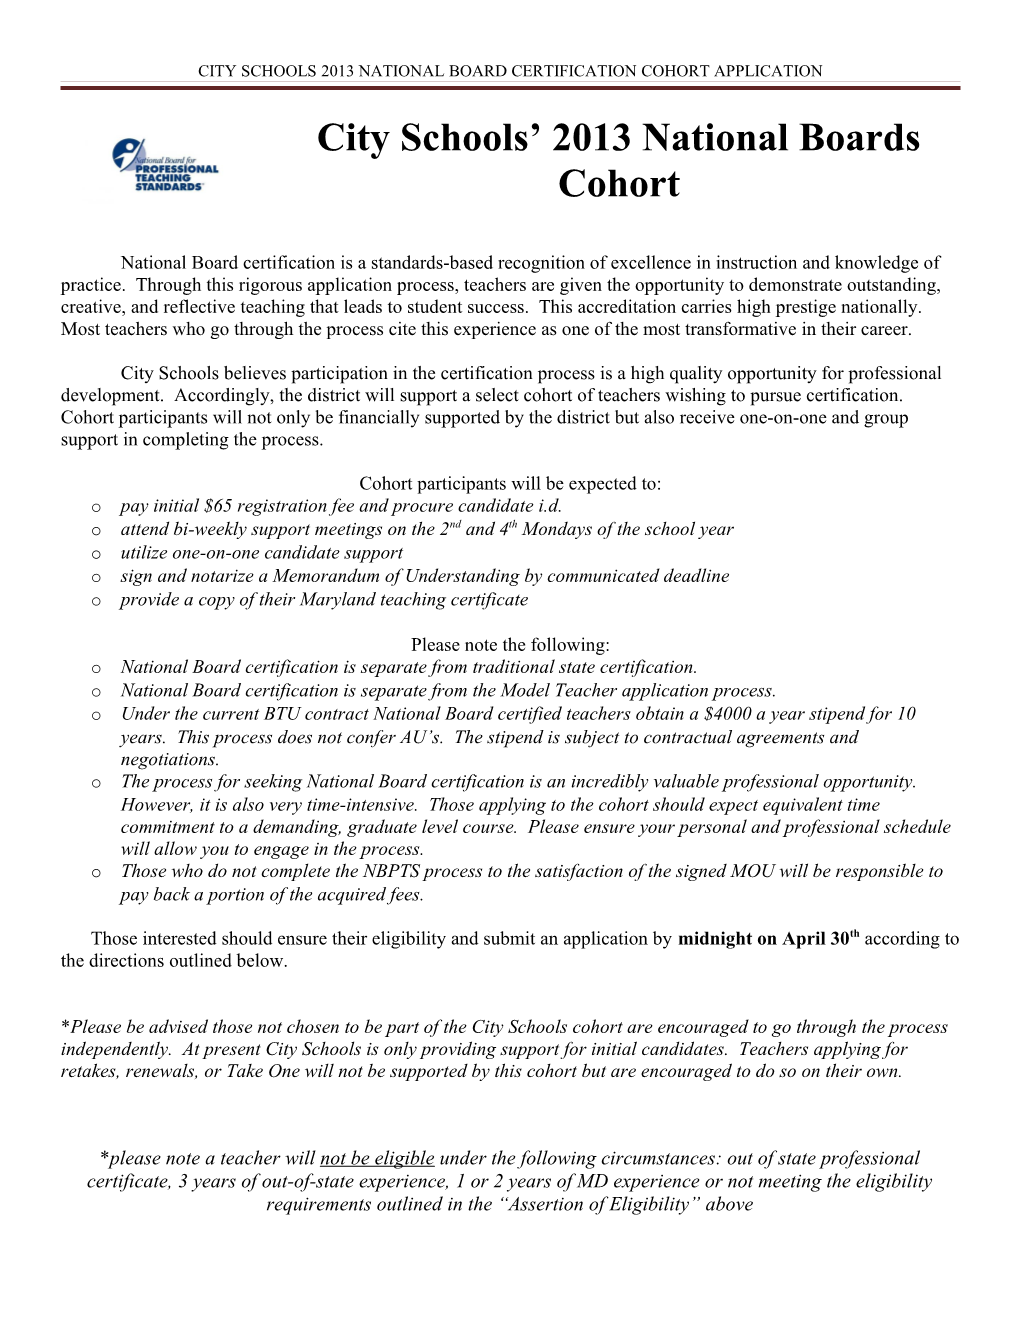 City Schools 2013 National Board Certification Cohort Application